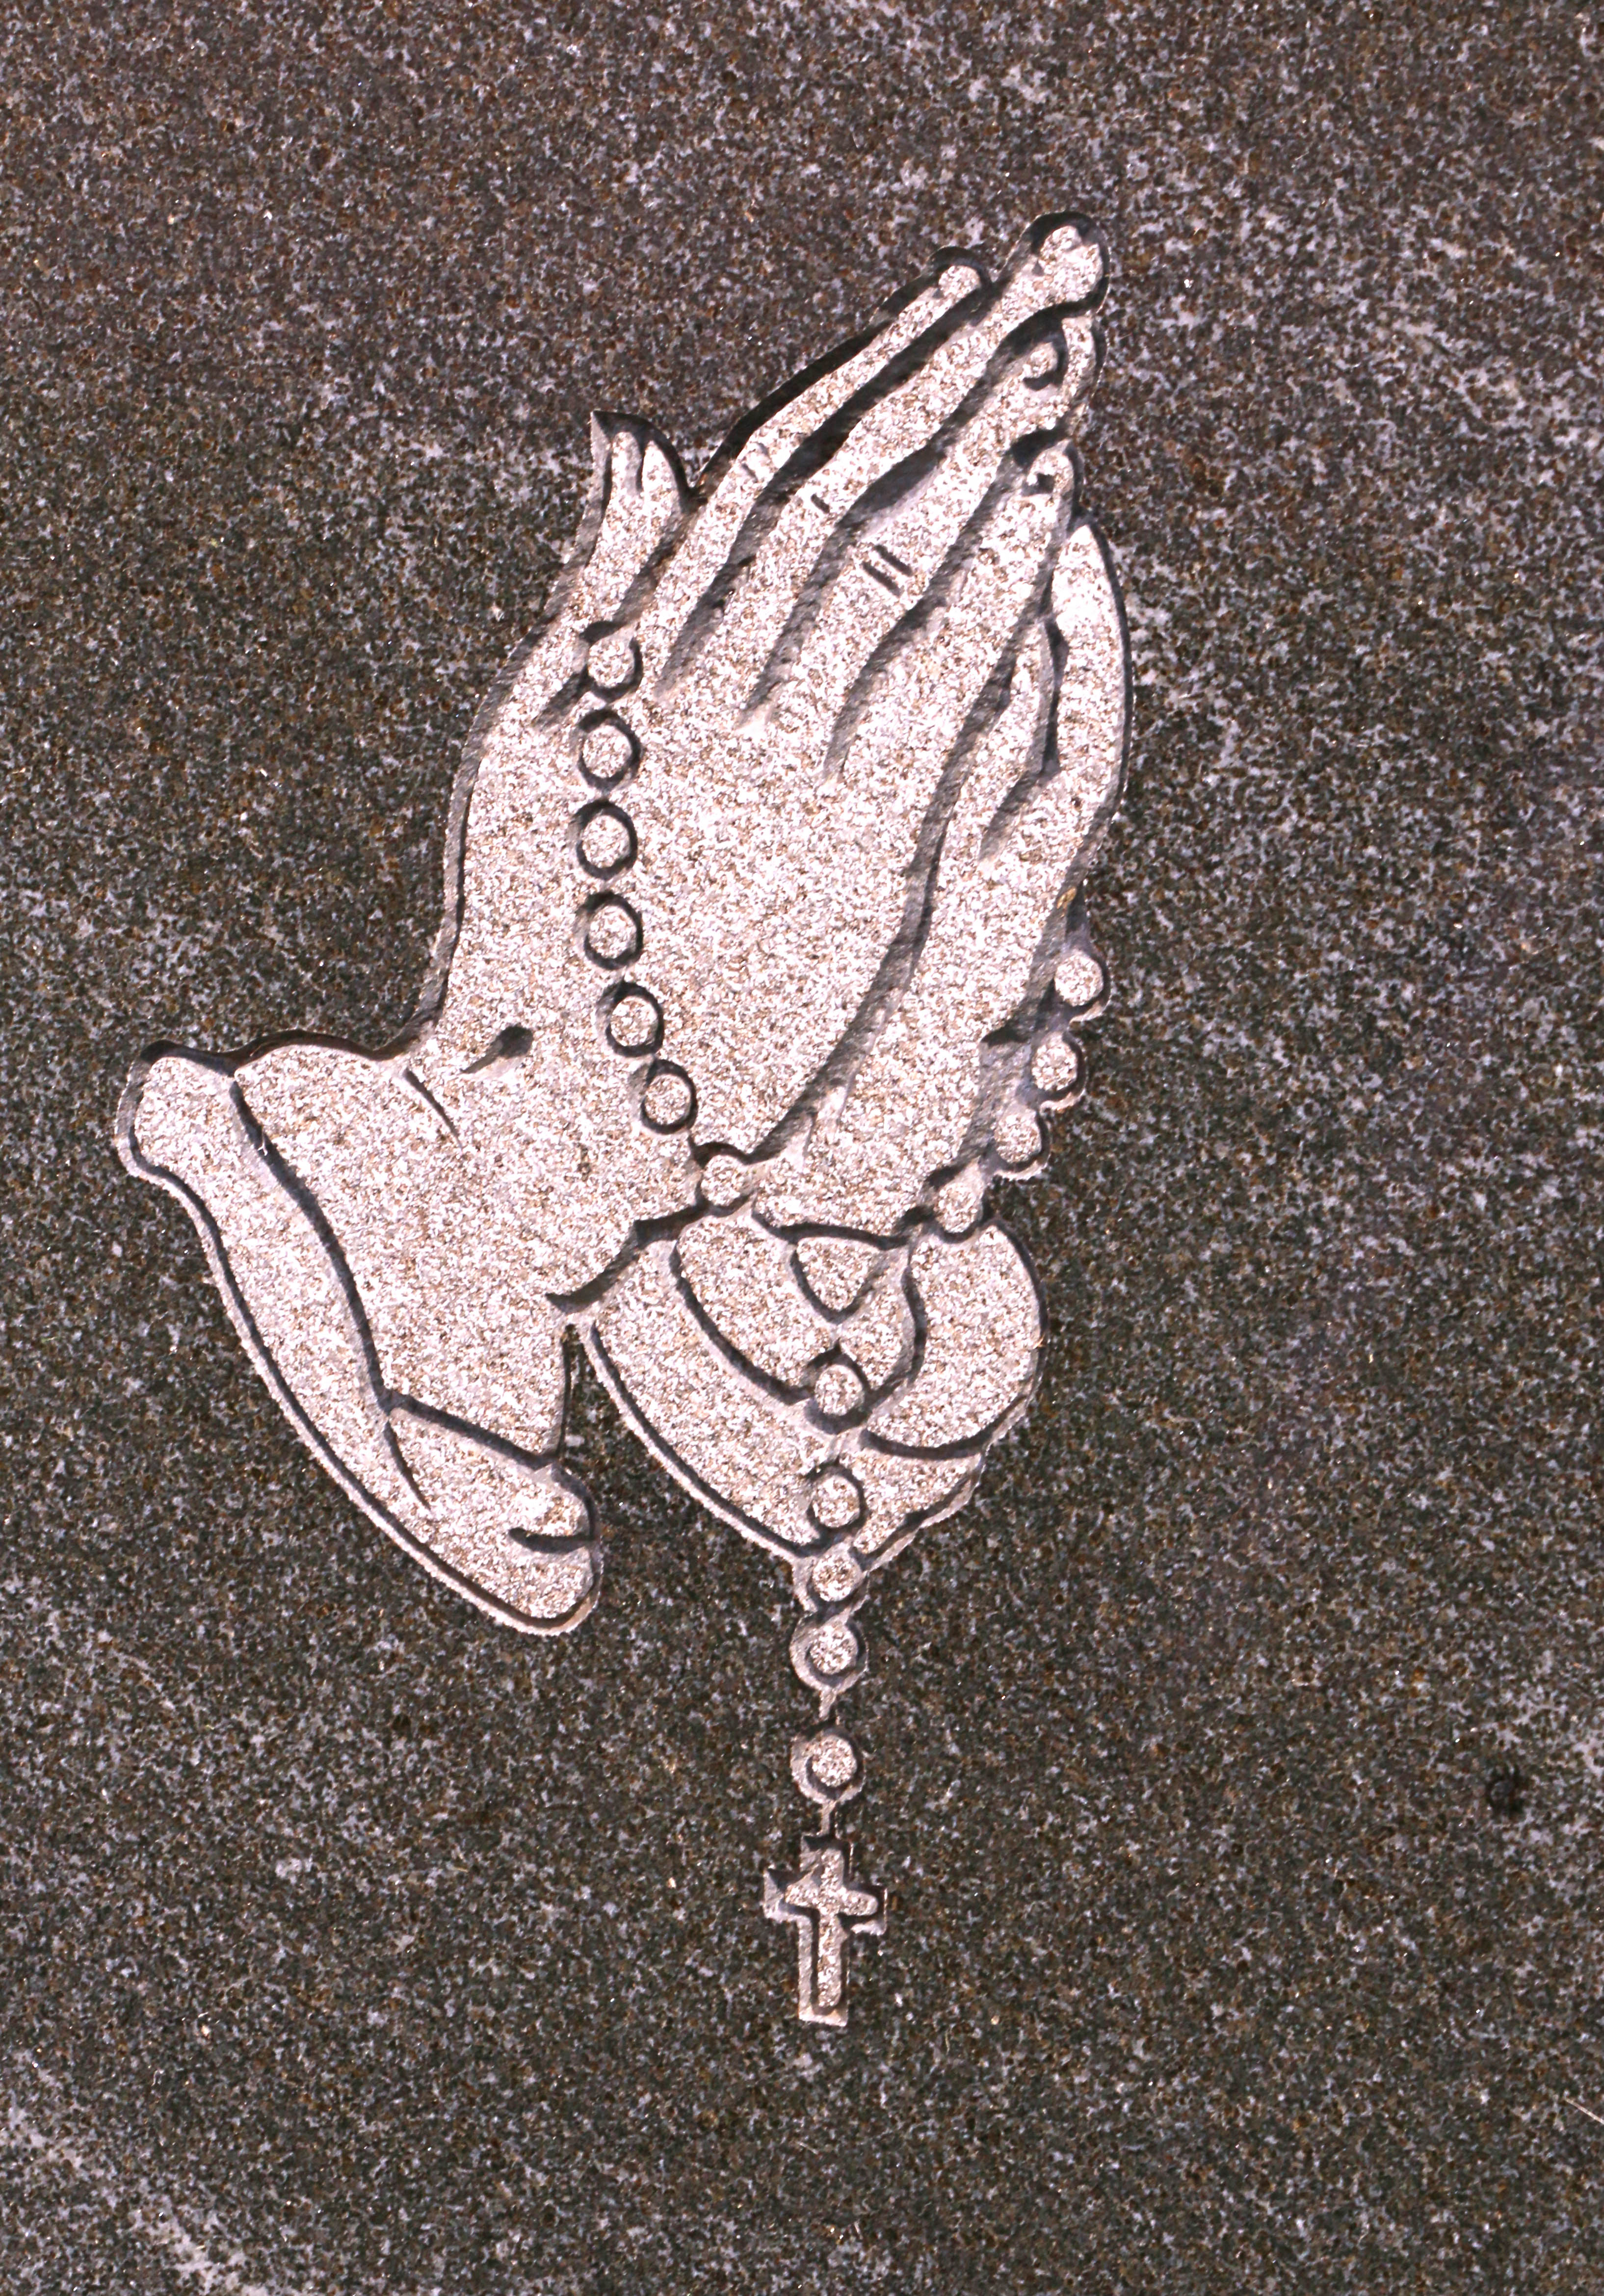 Headstone close-up - praying hands